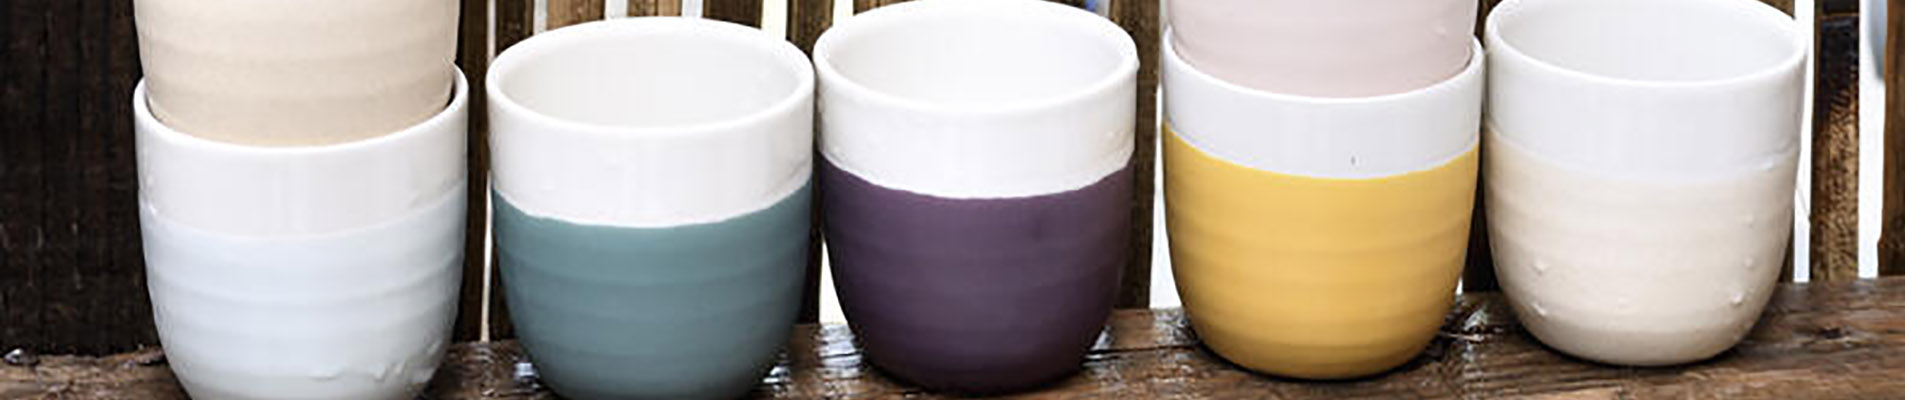 Jars Céramiques - Tischkultur